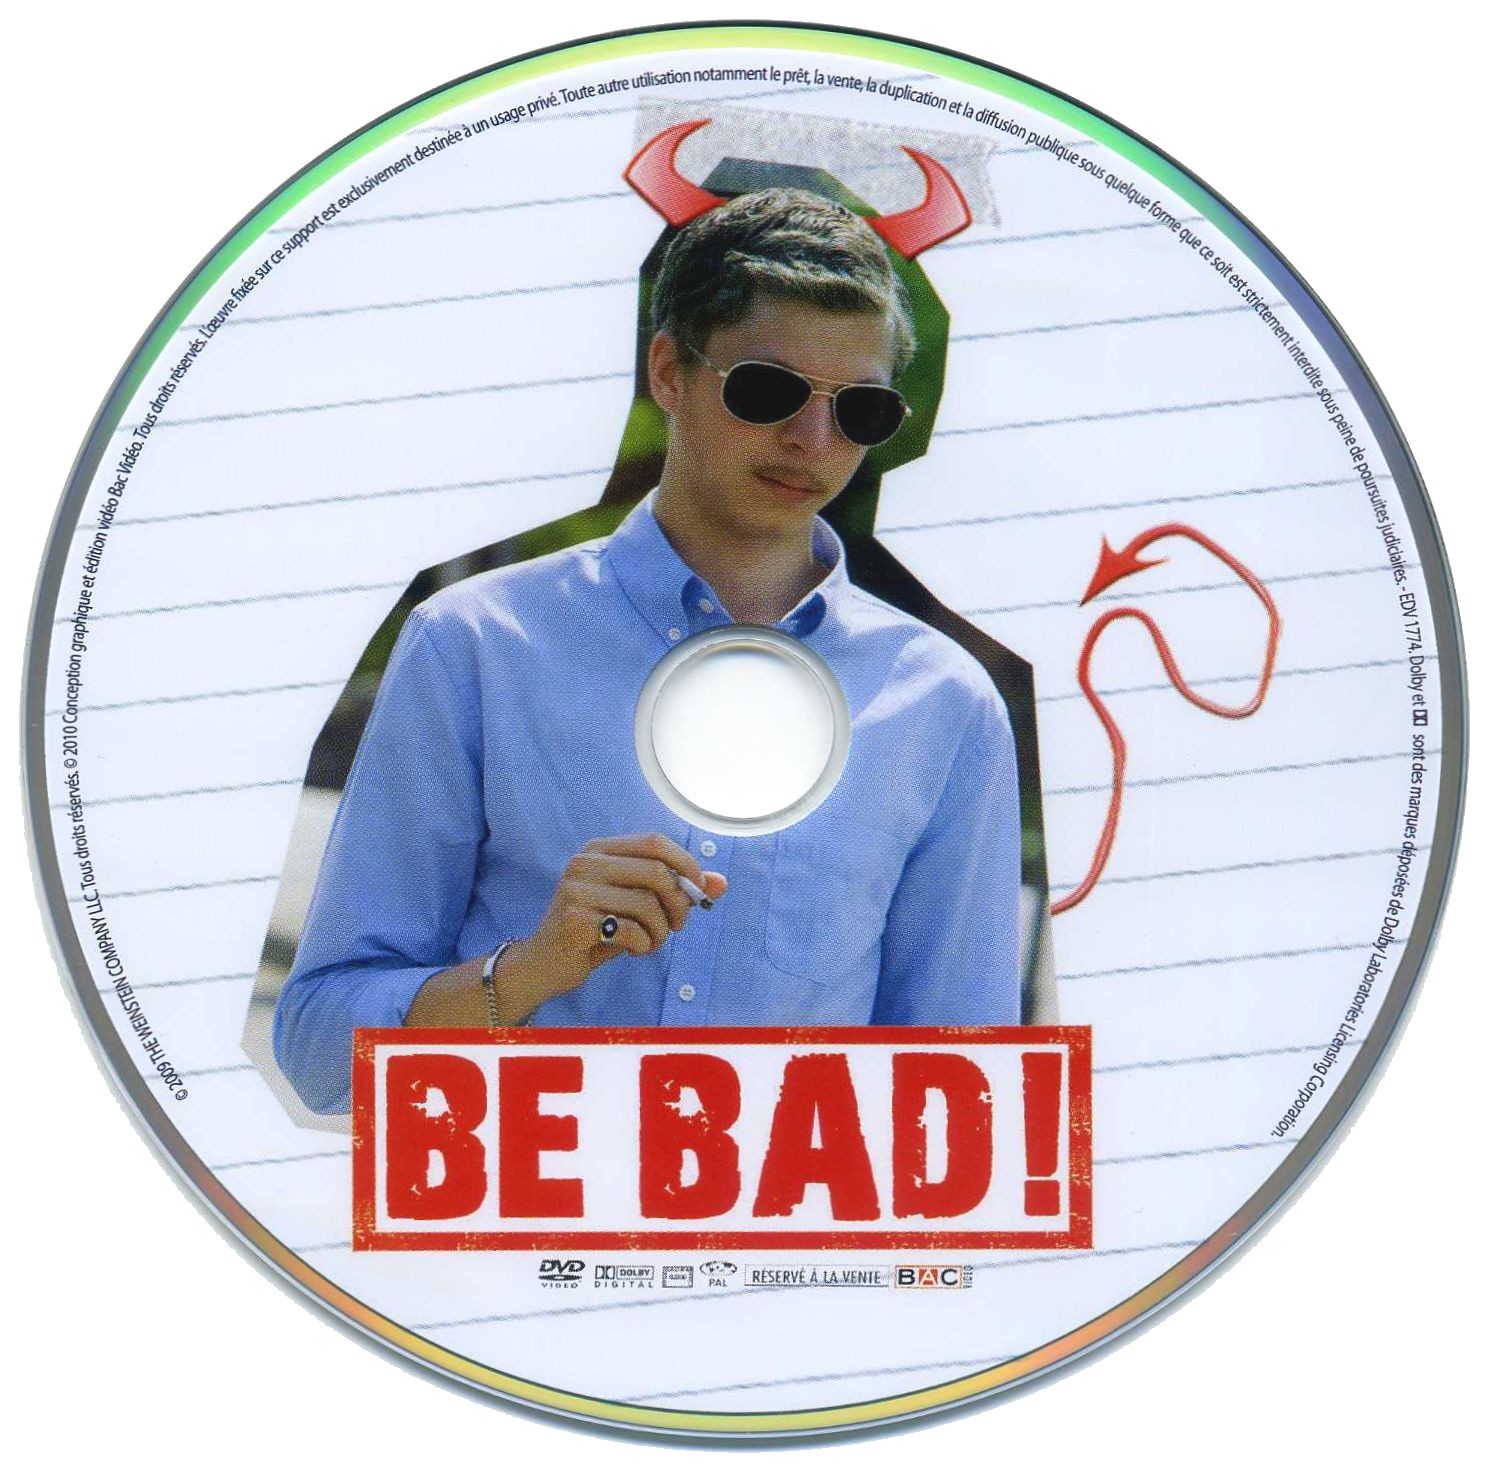 Be bad